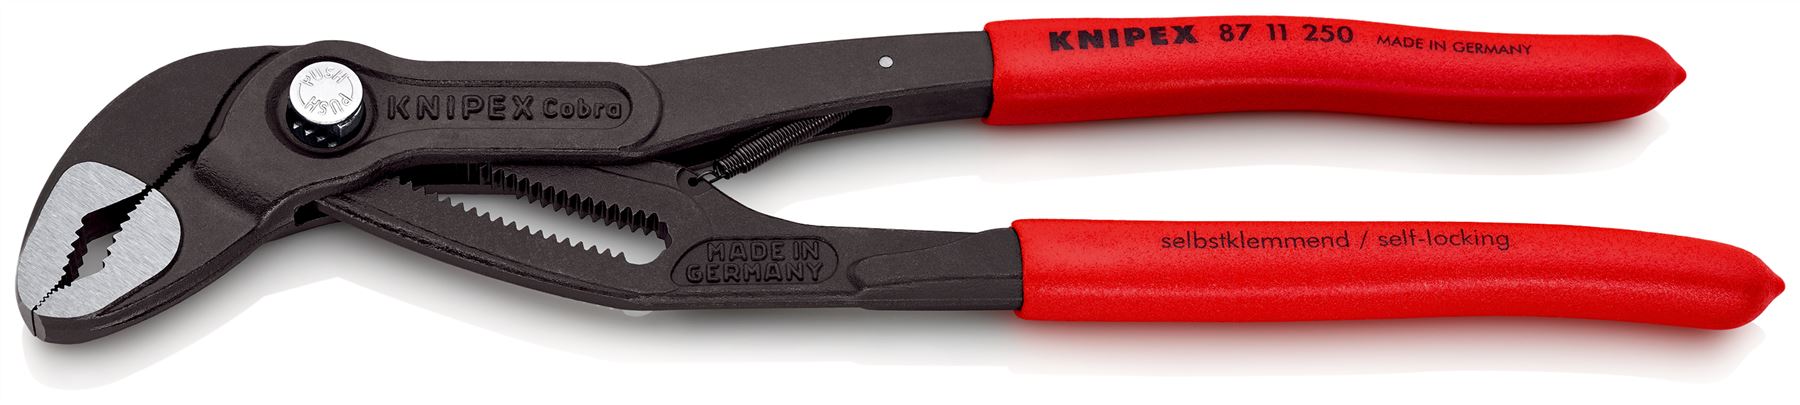 KNIPEX Cobra…matic Water Pump Pliers Automatic Adjustment 250mm Plastic Coated Handles Non Slip 87 11 250